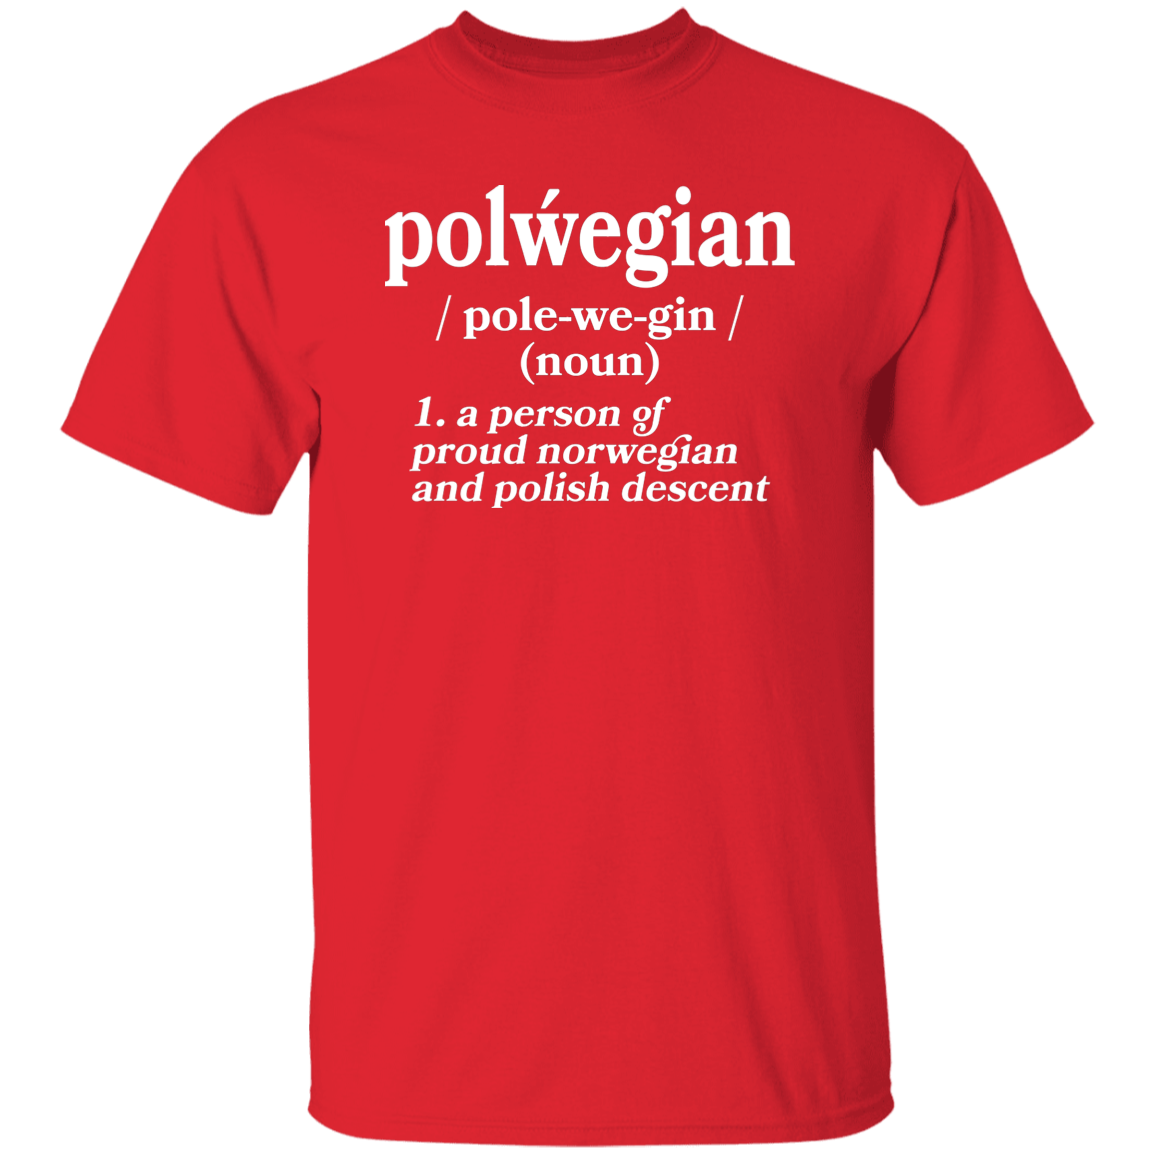 Polwegian - Norwegian and Polish Descent Apparel CustomCat G500 5.3 oz. T-Shirt Red S